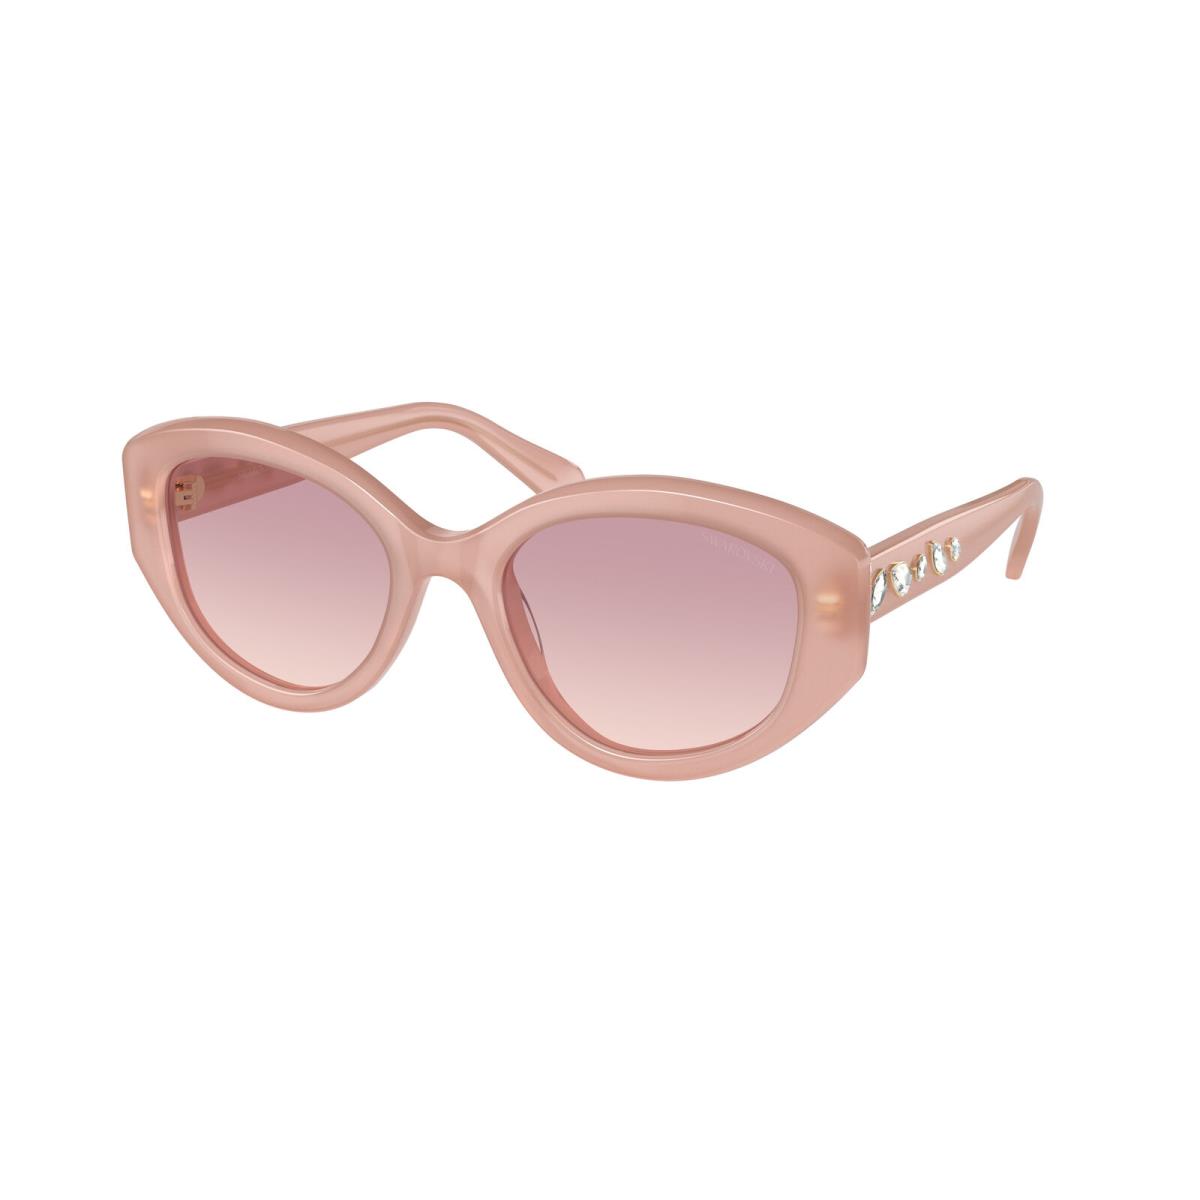 Swarovski SK 6005 Pink Opal Brown Gradient Viole 102568 Sunglasses